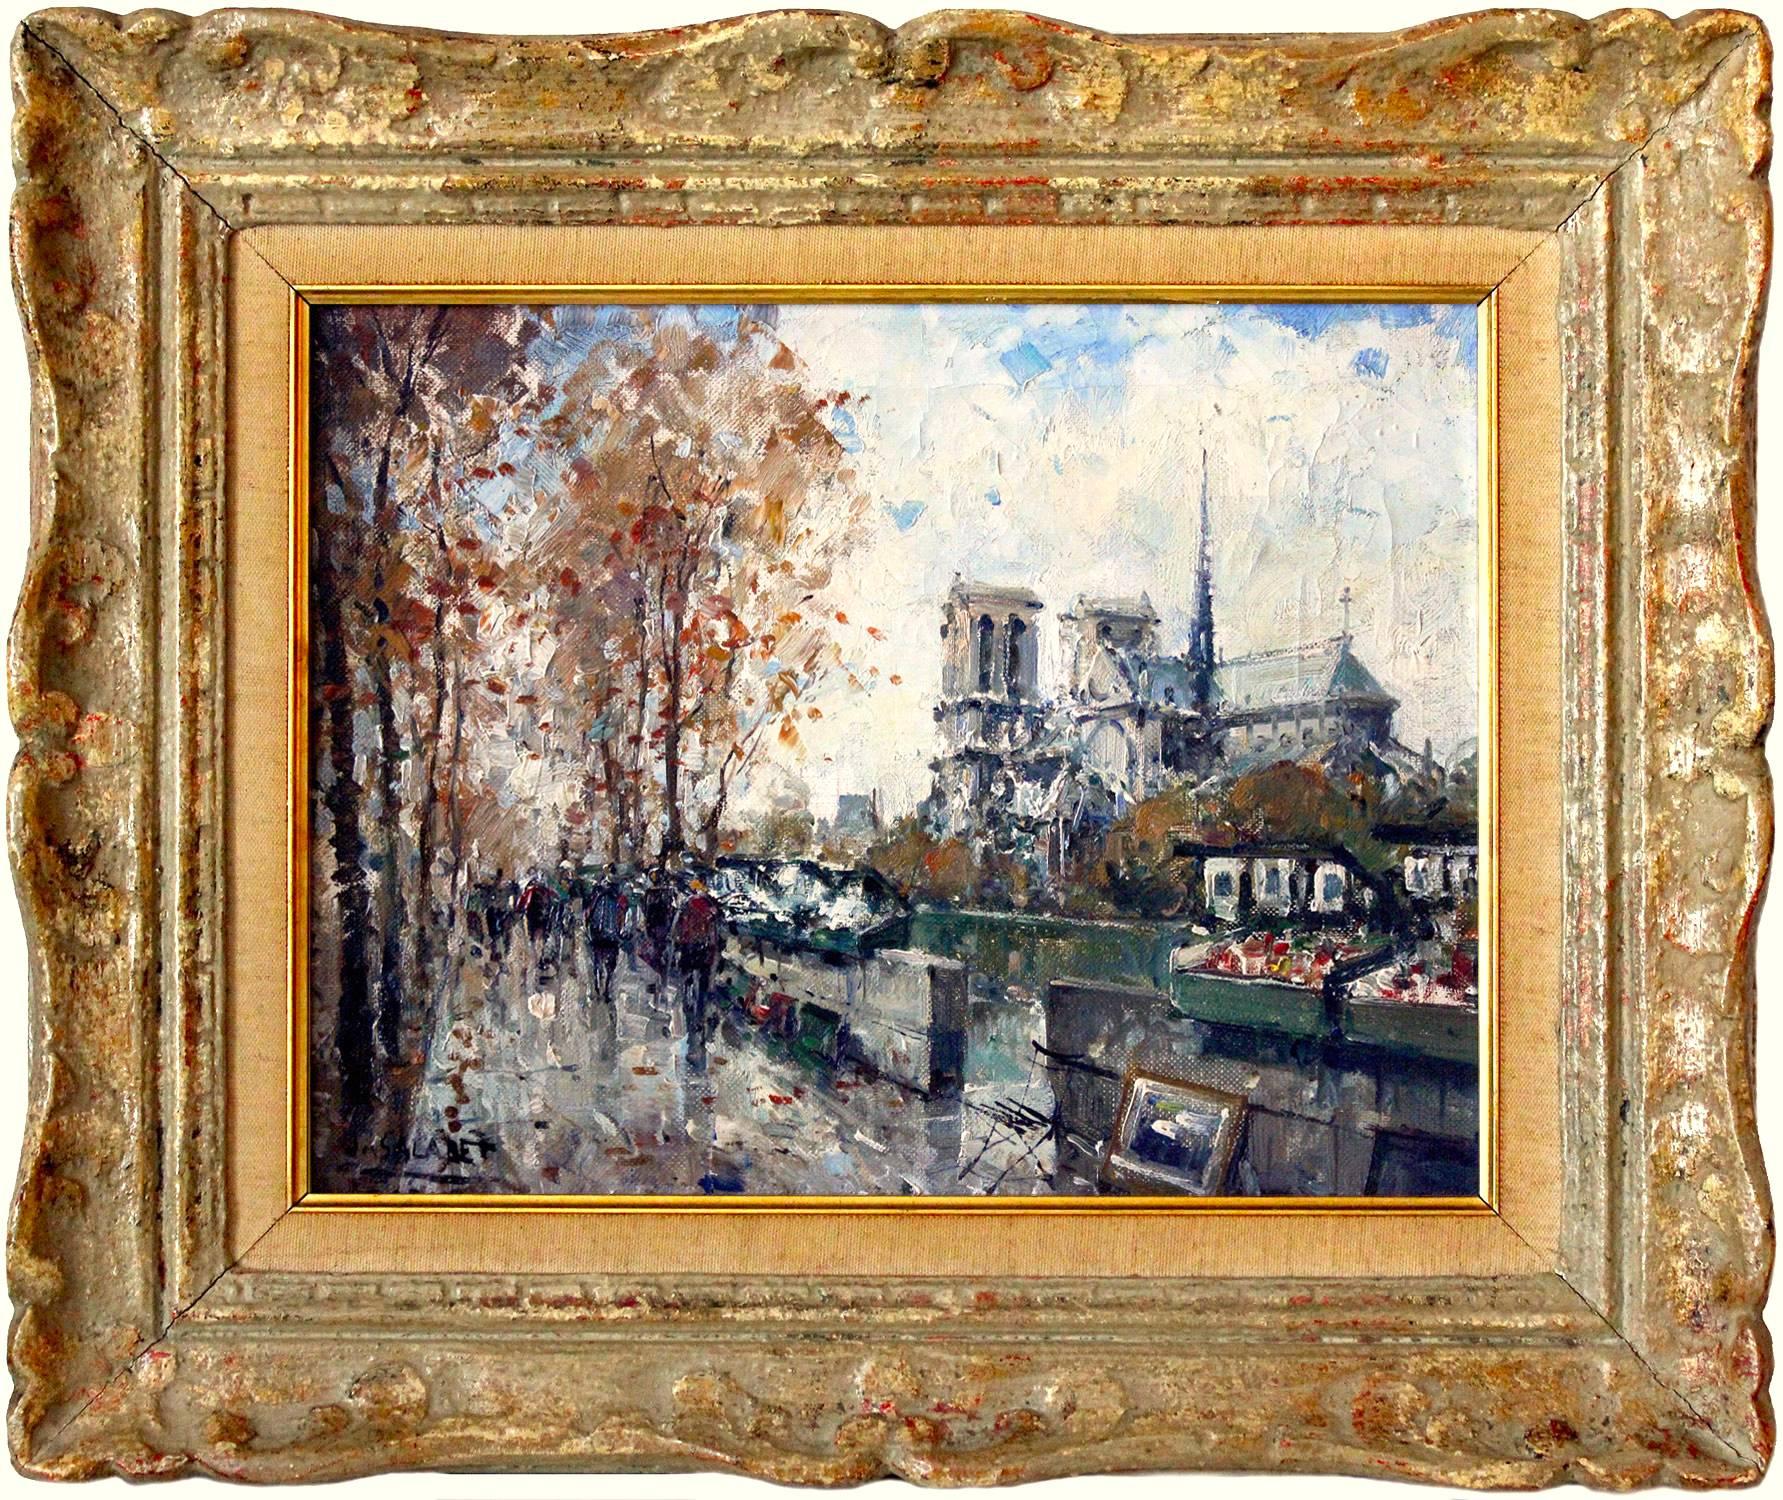 Jean Salabet Figurative Painting - "Notre Dame" Post-Impressionist Parisian Street Scene Oil Painting on Canvas